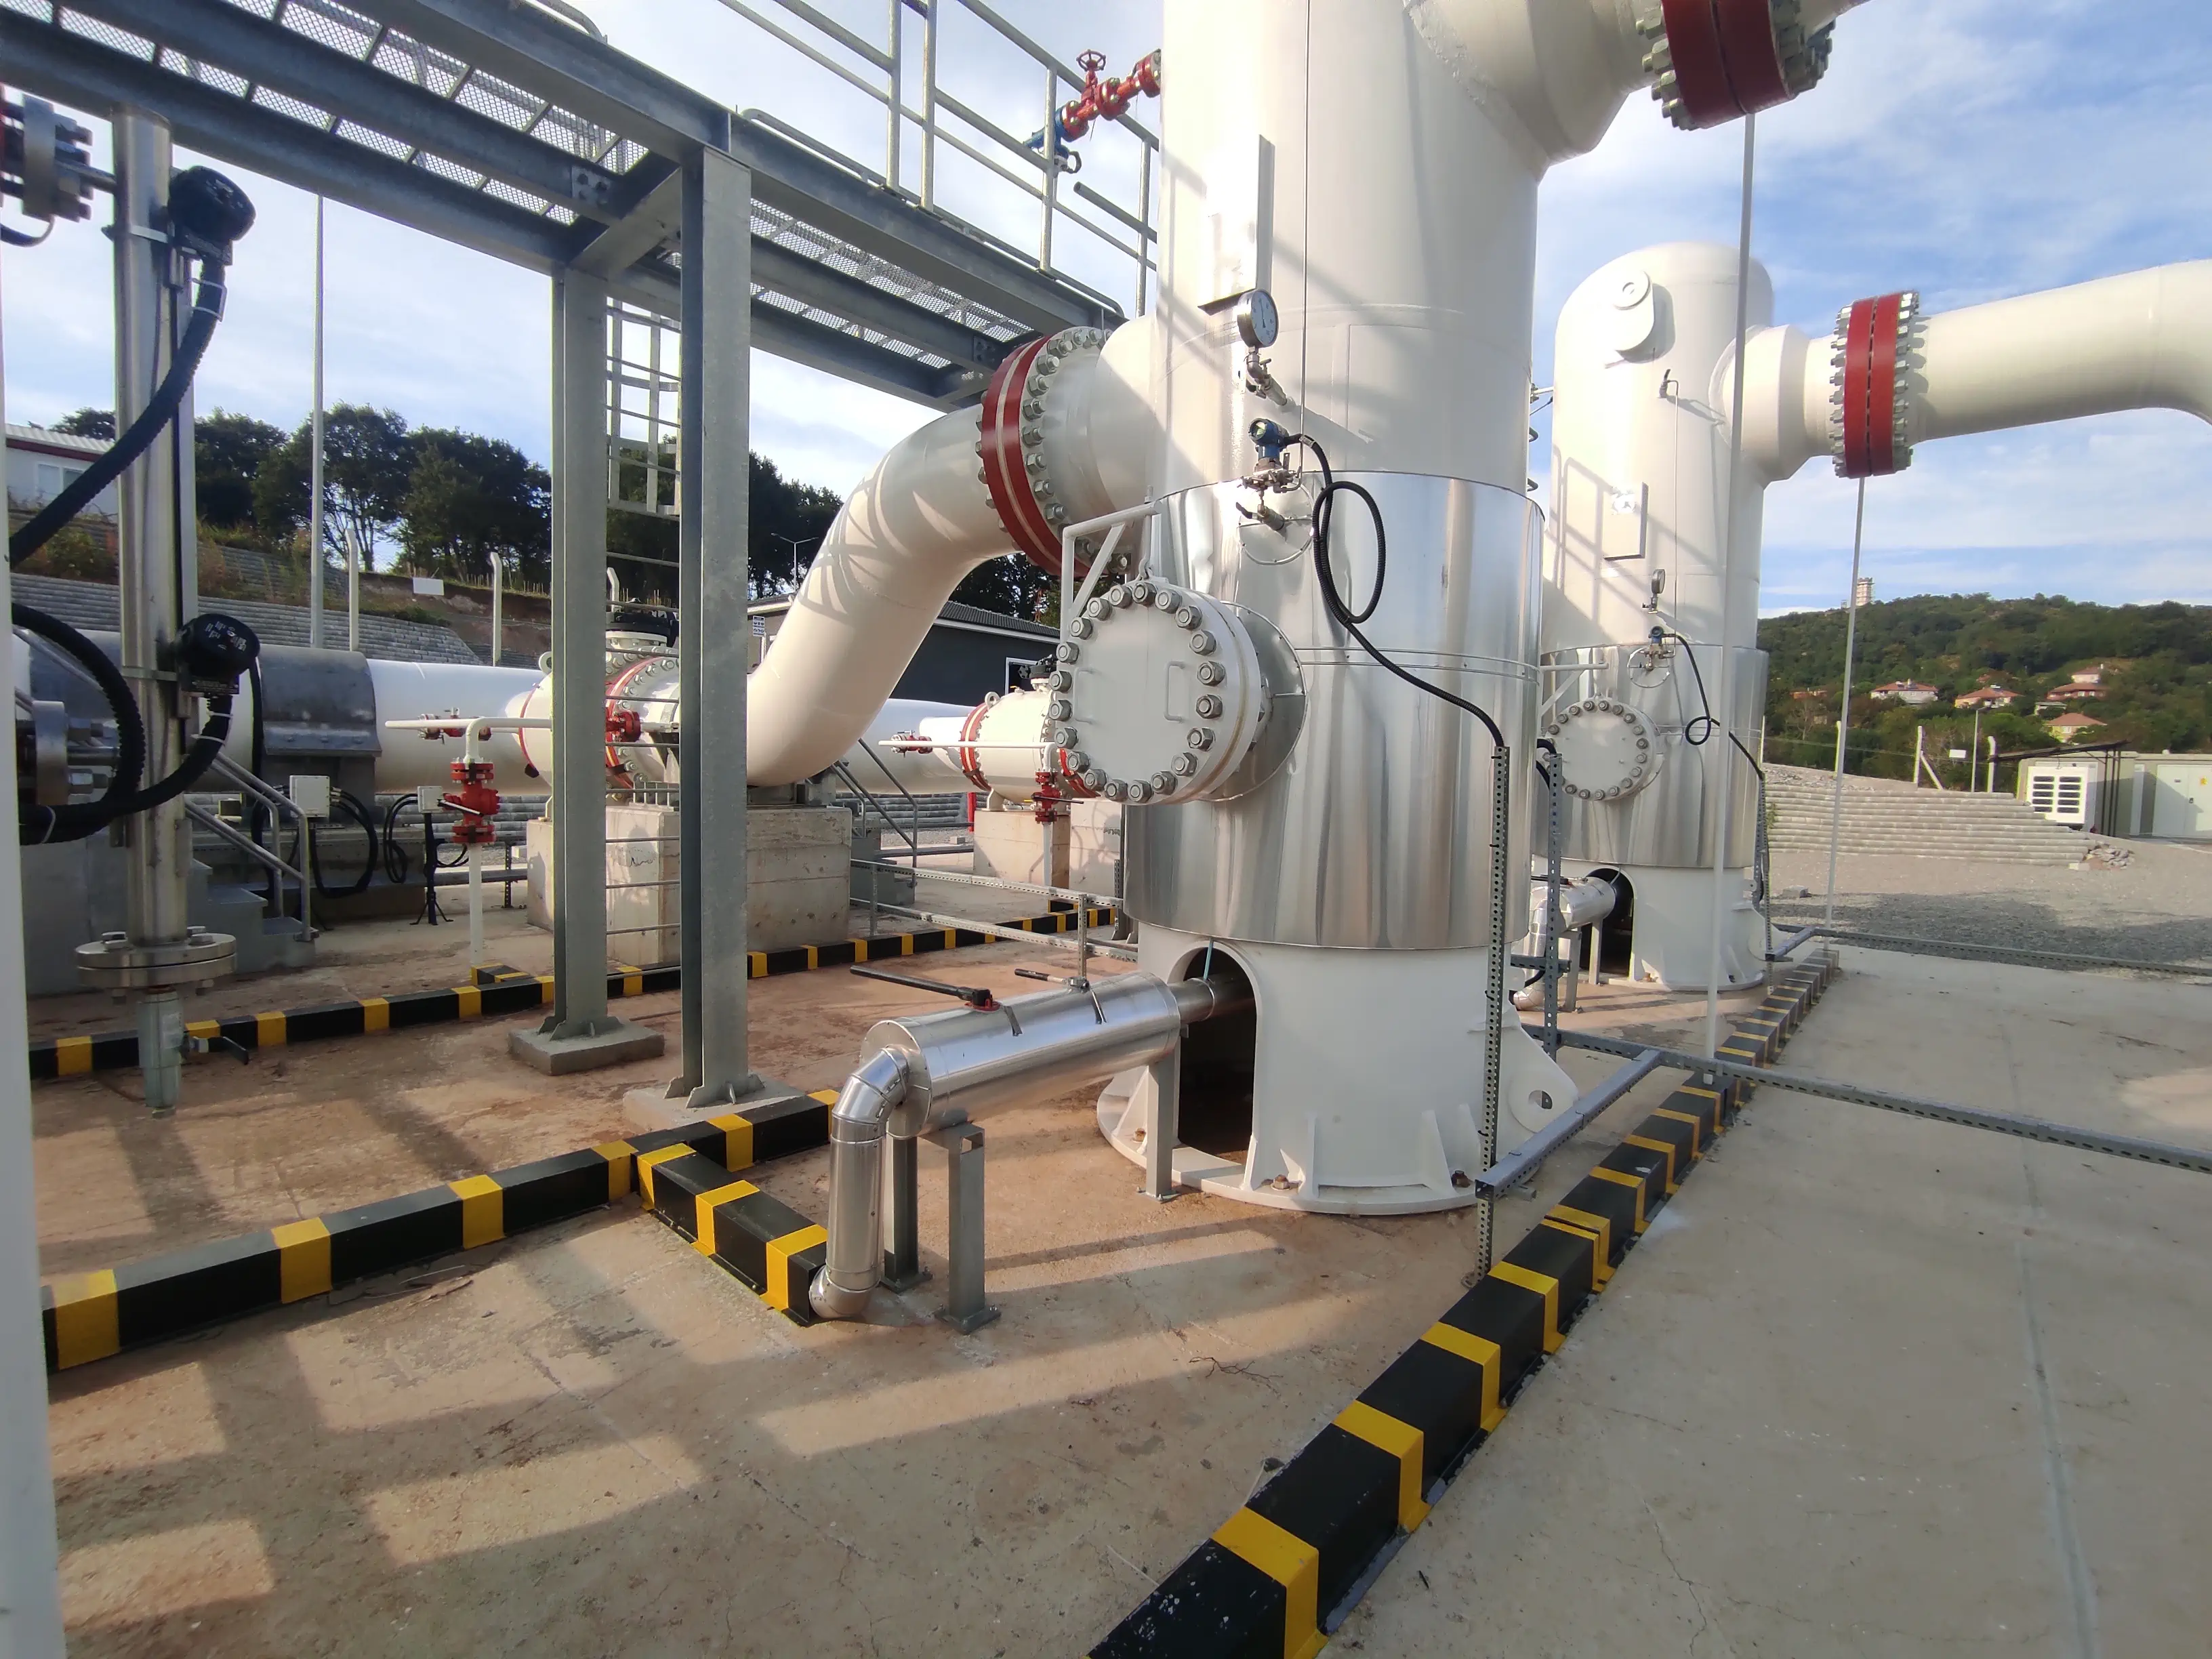 Batı Karadeniz Gas Measurement Station - Heat Trace Applications